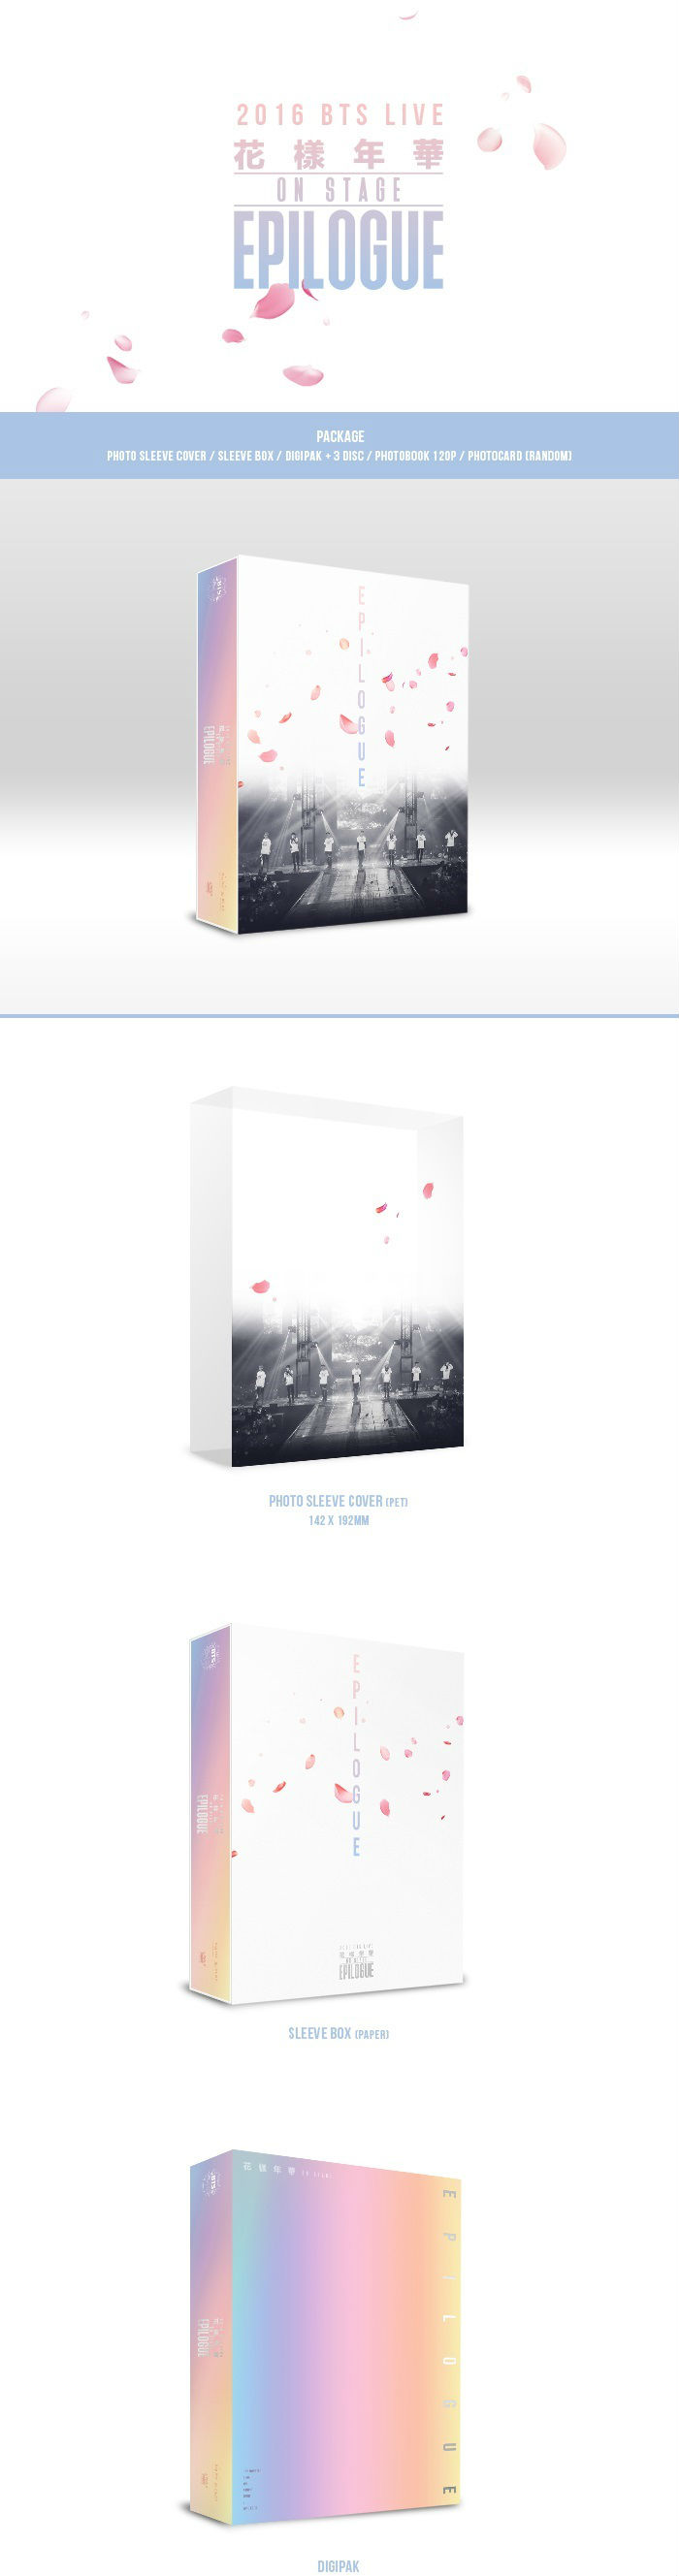 Bts 16 Bts Live 花樣年華 On Stage Epilogue Concert Dvd Music Korea